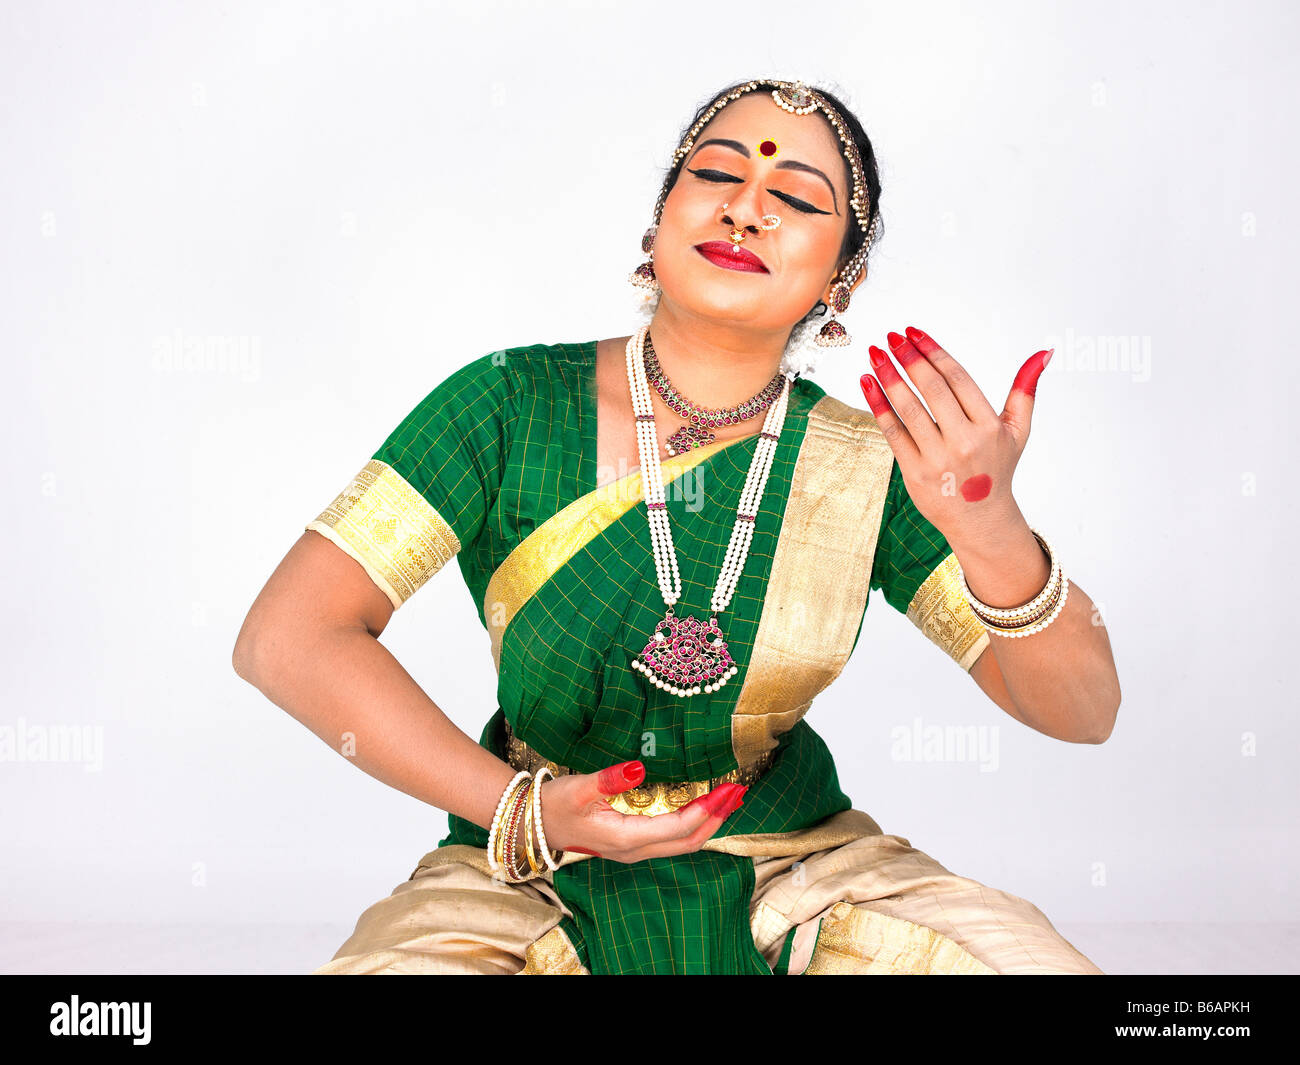 female bharathanatyam dancer of tamil nadu in south india B6APKH